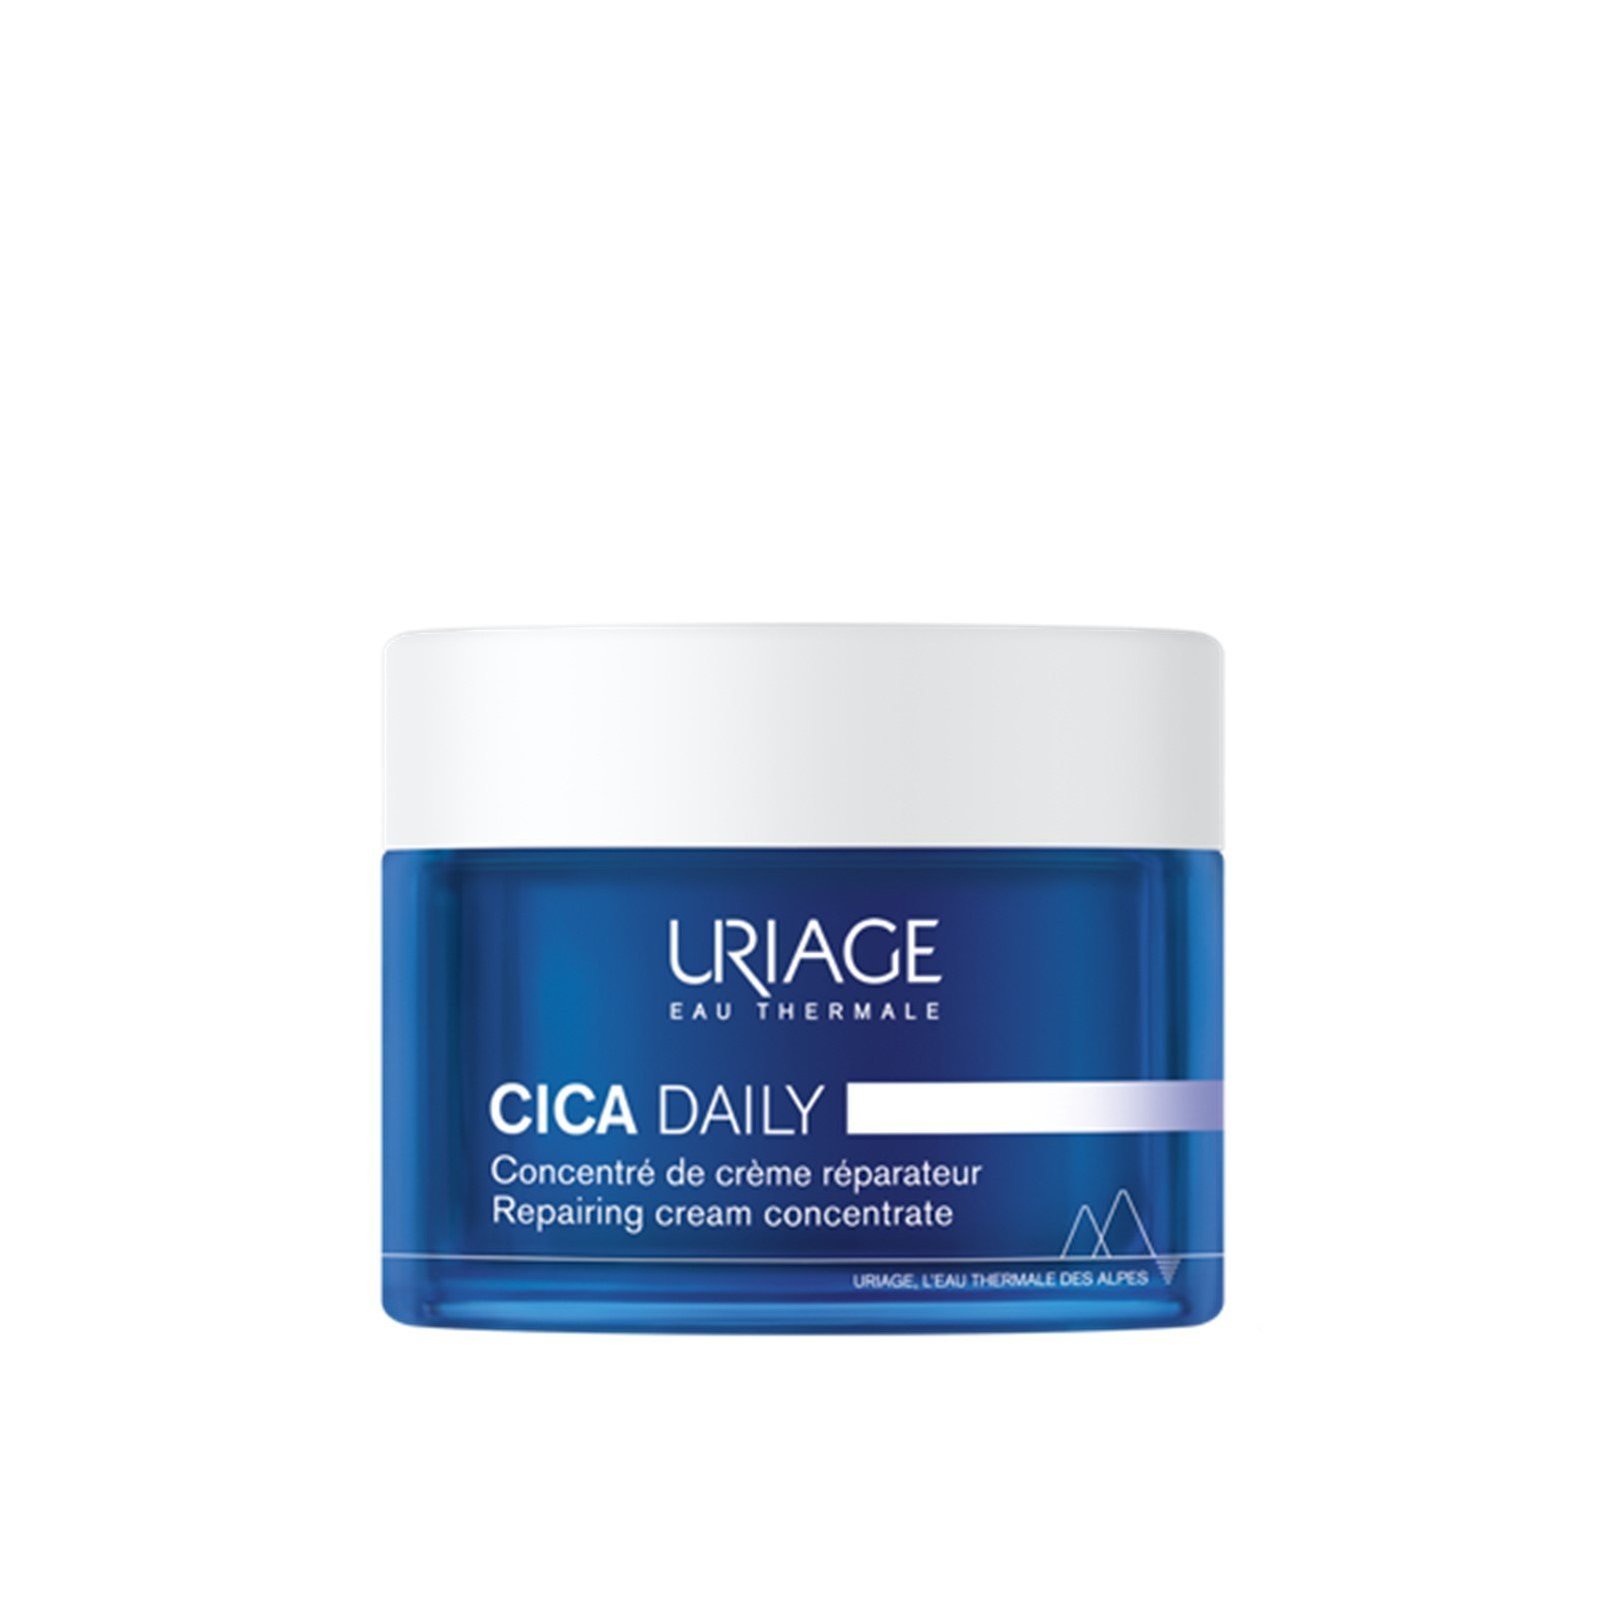 Uriage CICA Daily Repairing Cream Concentrate 50ml (1.7floz)